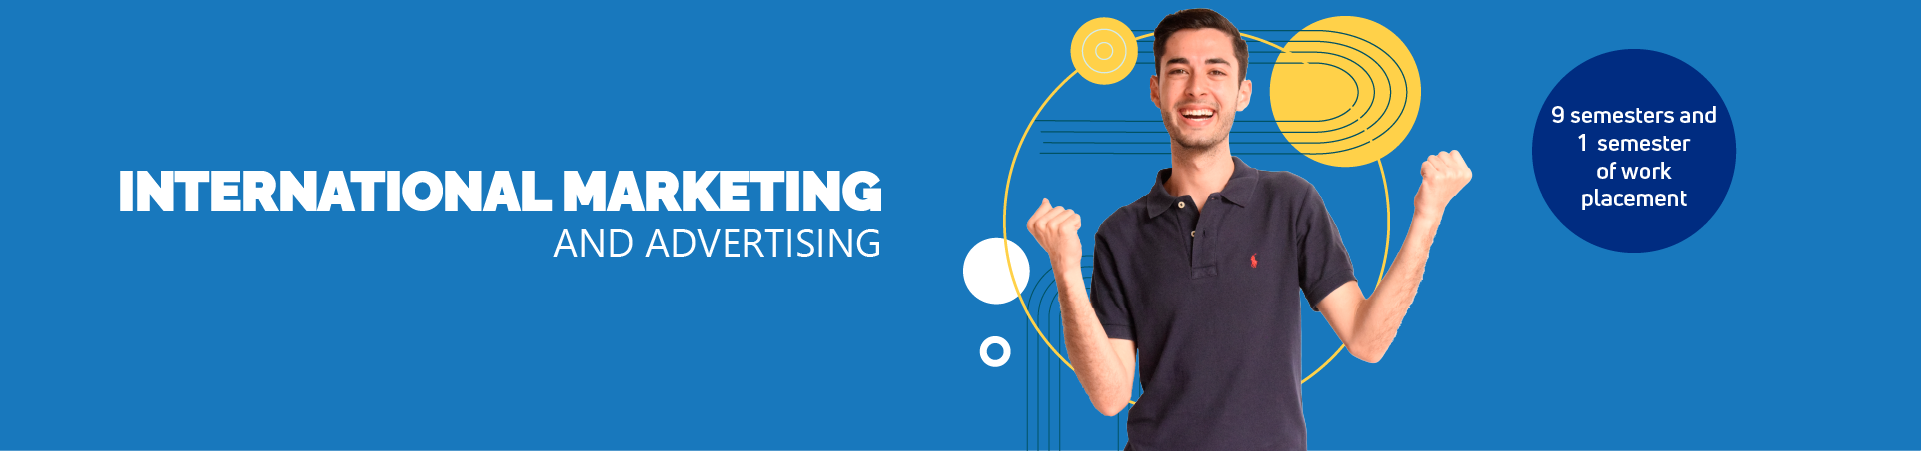 International Marketing and Advertising
                  